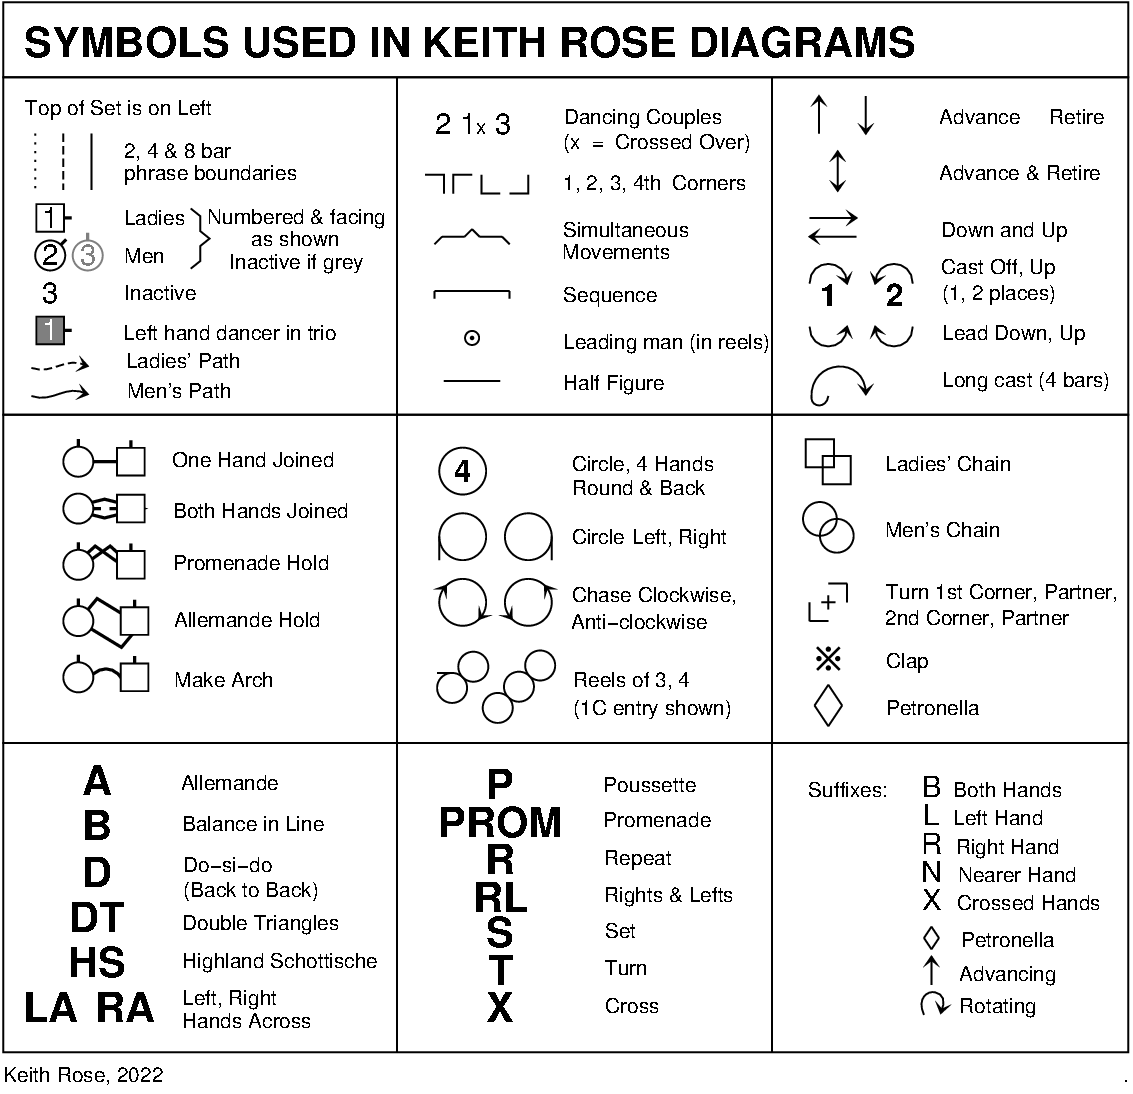  Symbols used in Keith's diagrams